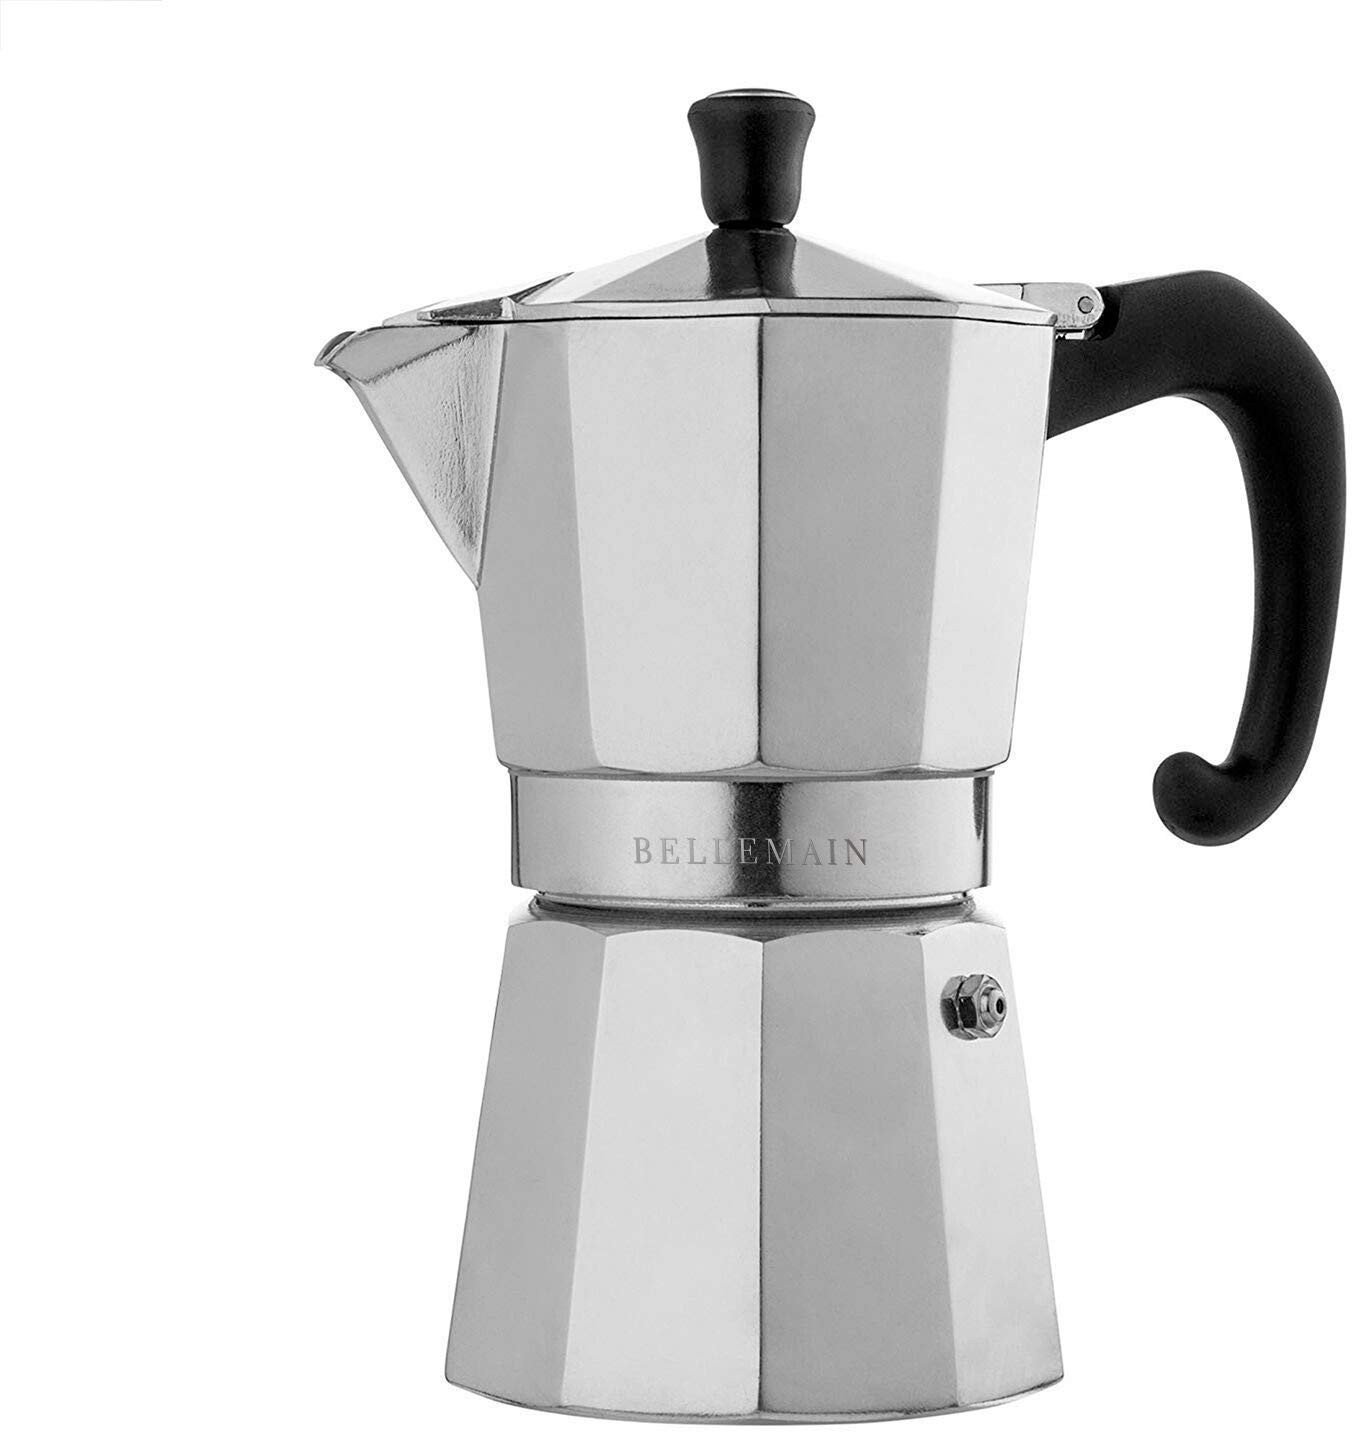 Zulay Kitchen Classic Stovetop Italian Style Espresso Maker 2020 Model -  Dark Gray